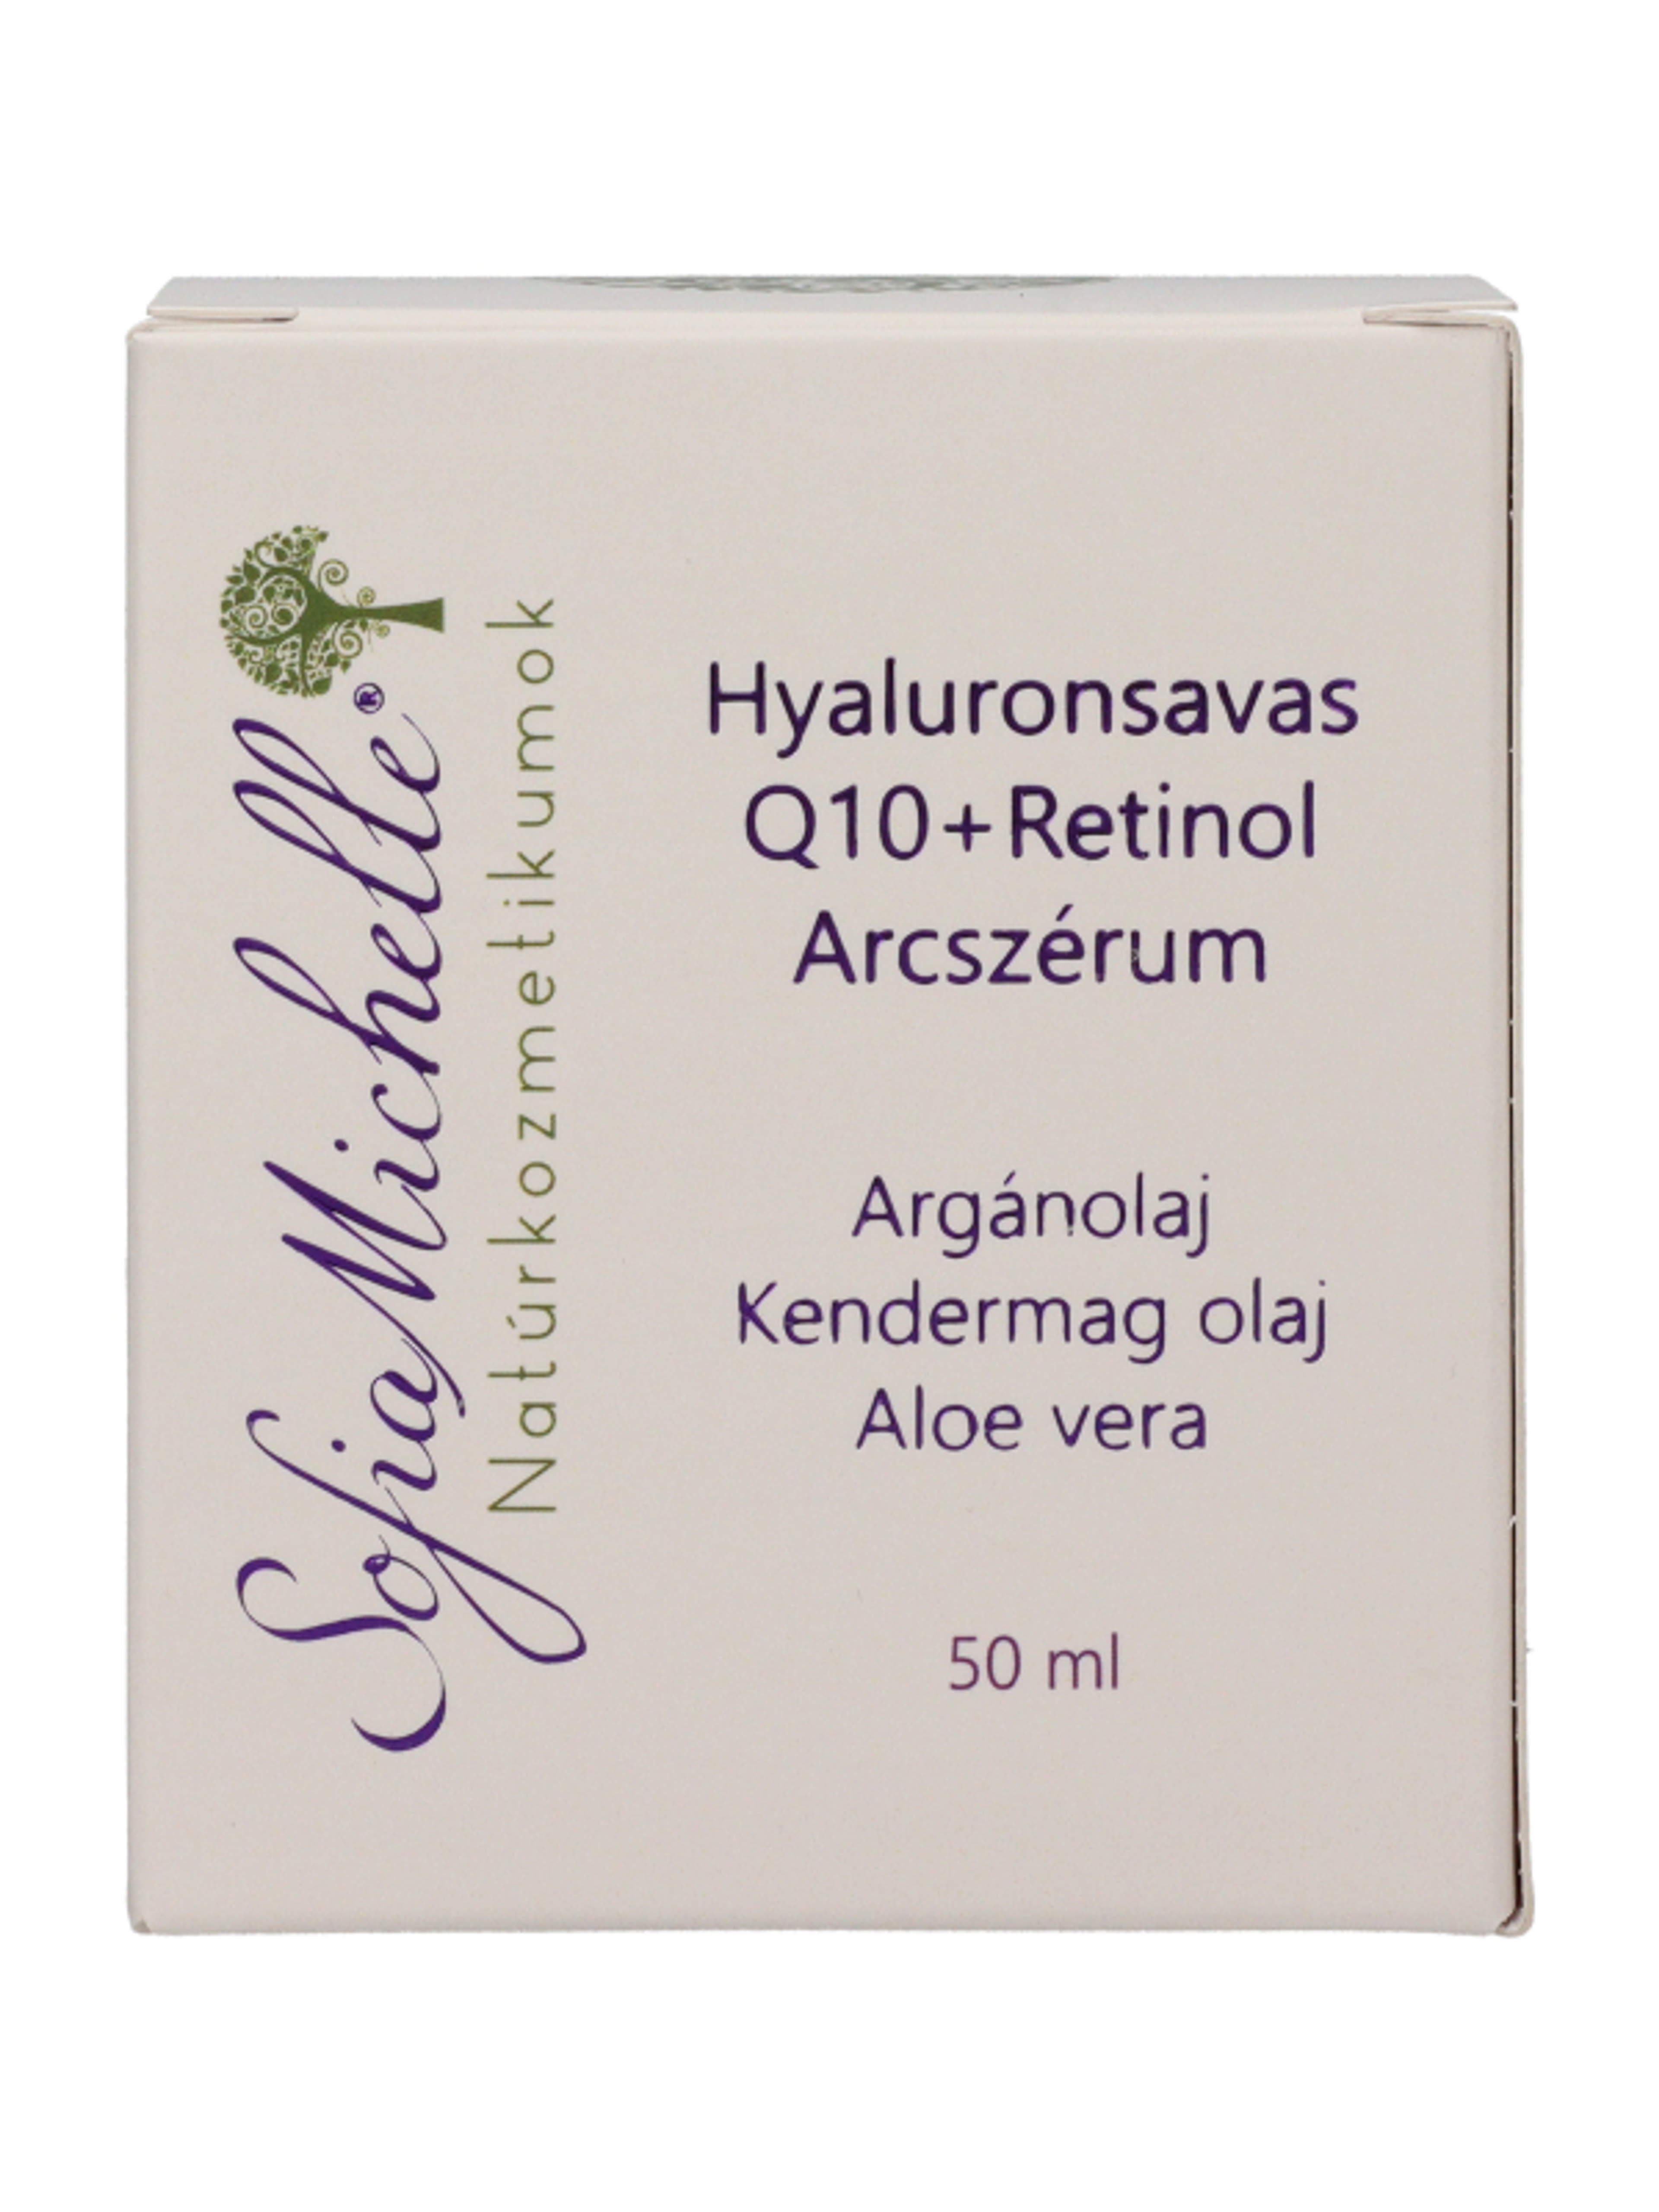 Sofia Michelle Hyaluronsavas Q10+Retinol arcszérum - 50 ml